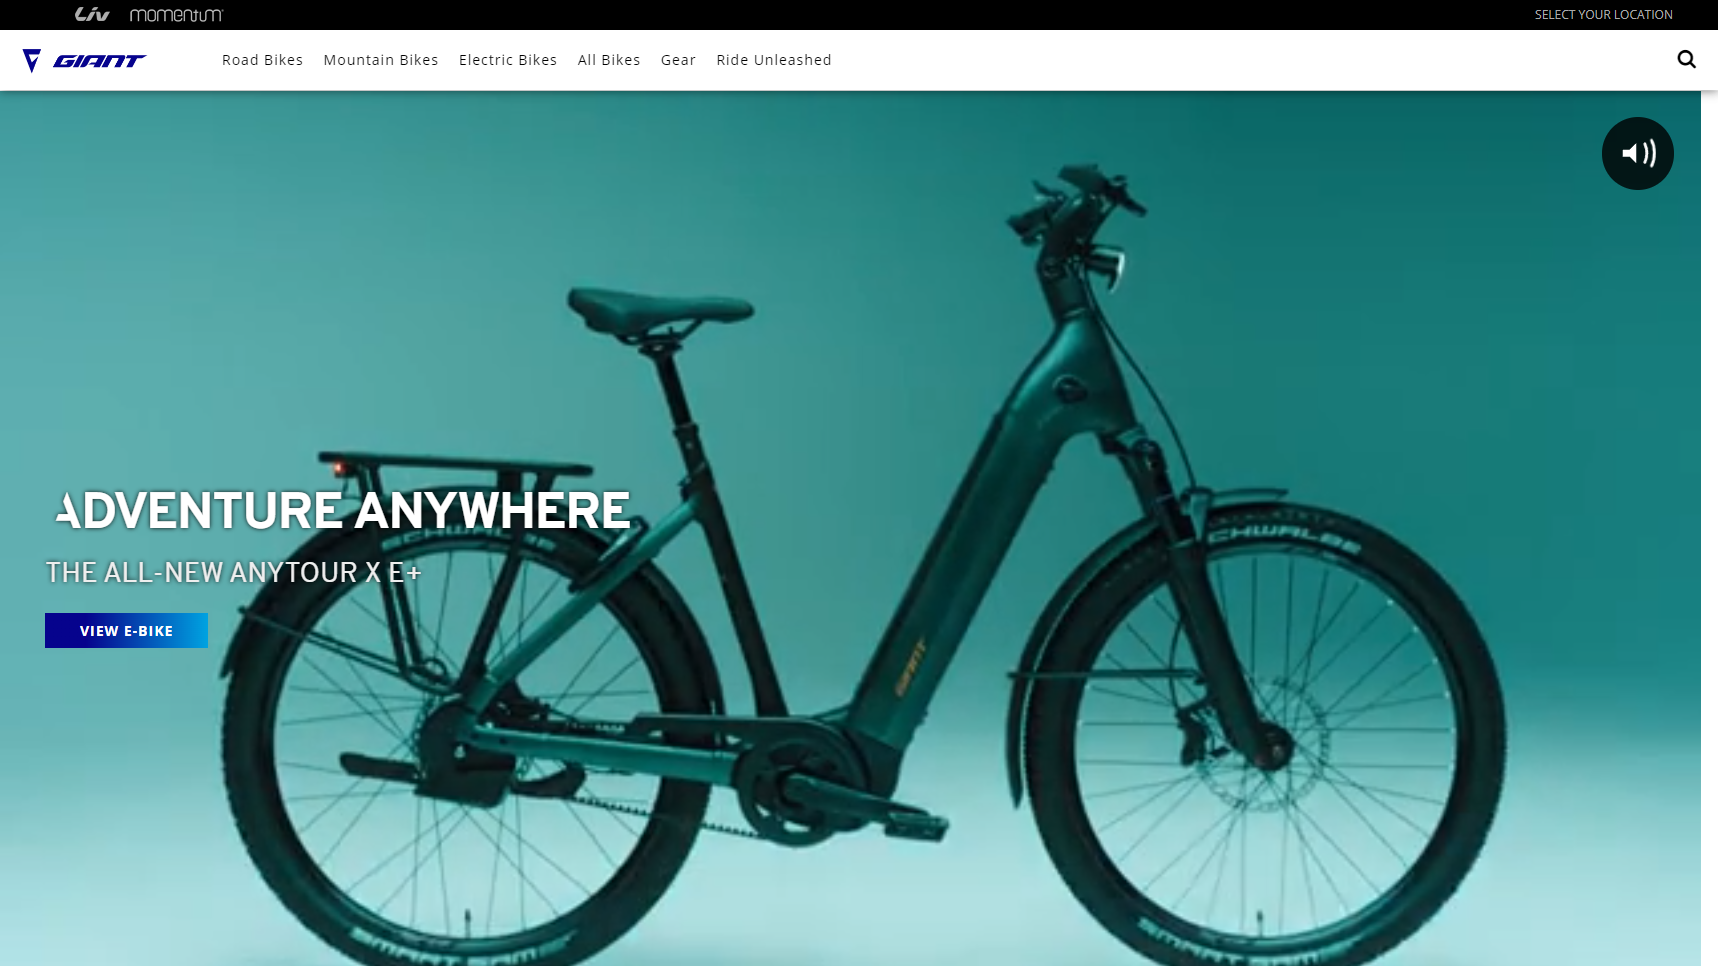 Giant Bicycles - E-Bike Manufacturer